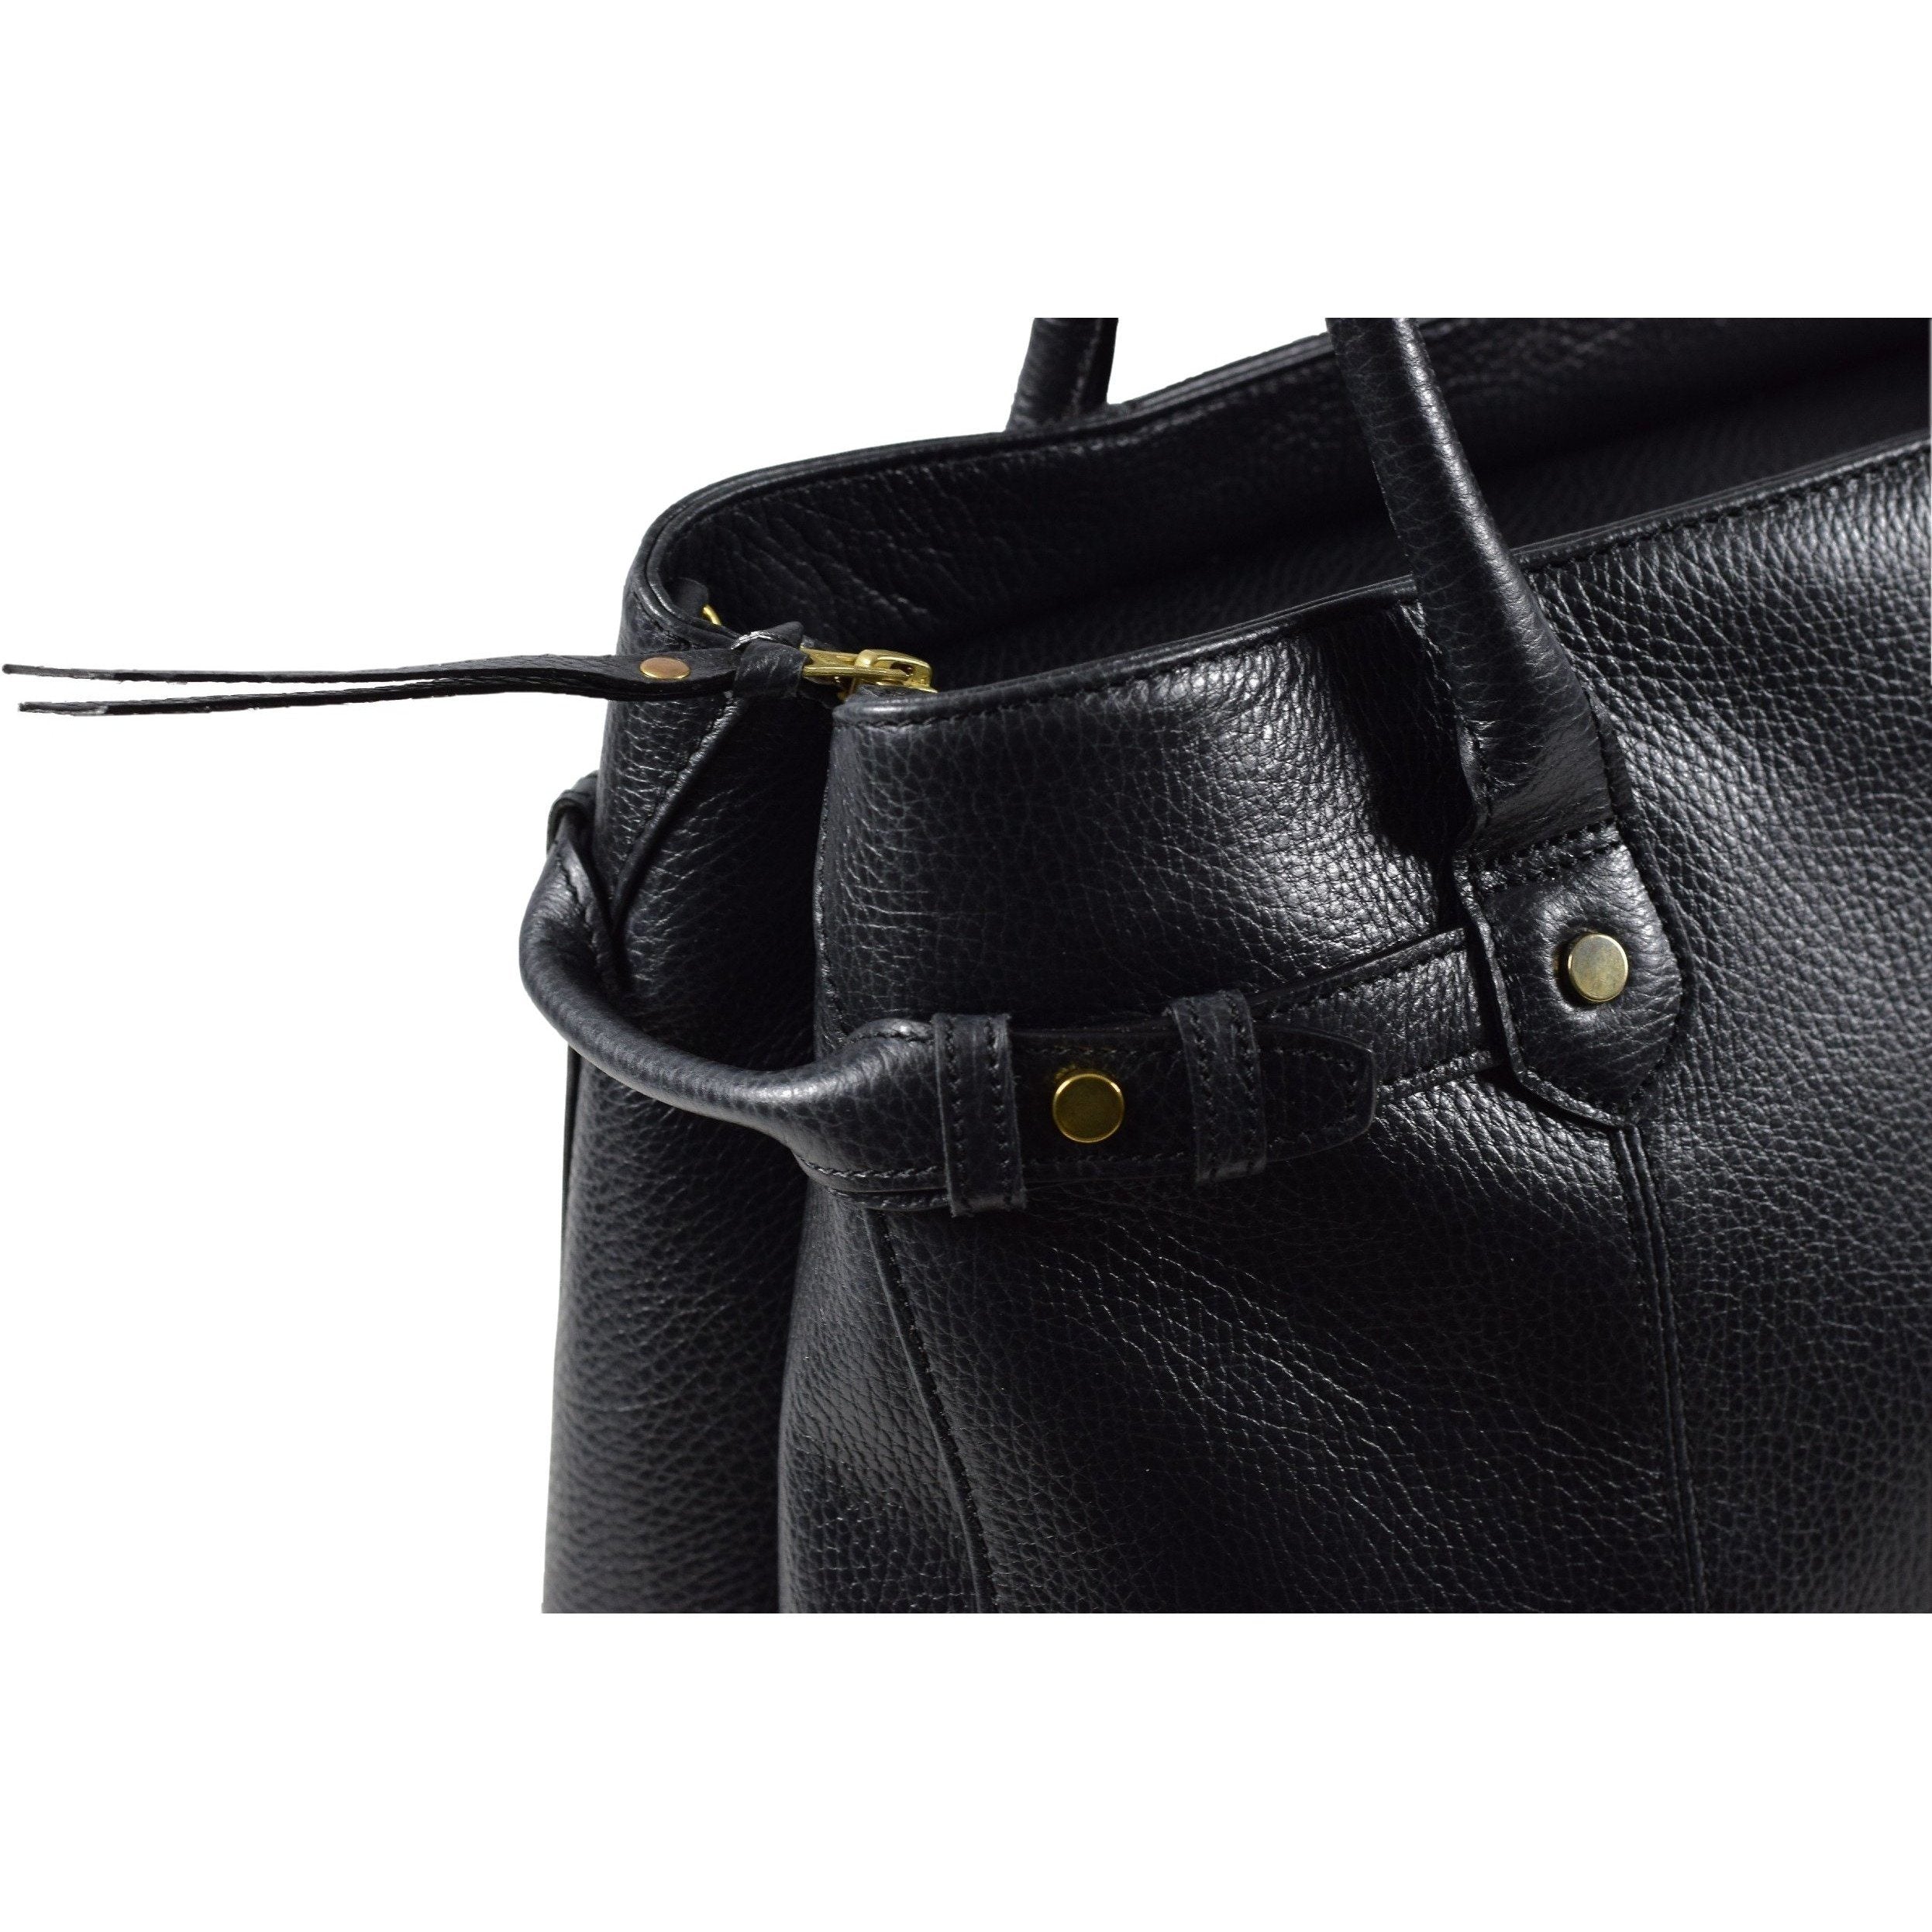 Bisenzio Stella Tote, Handbag | LAND Leather